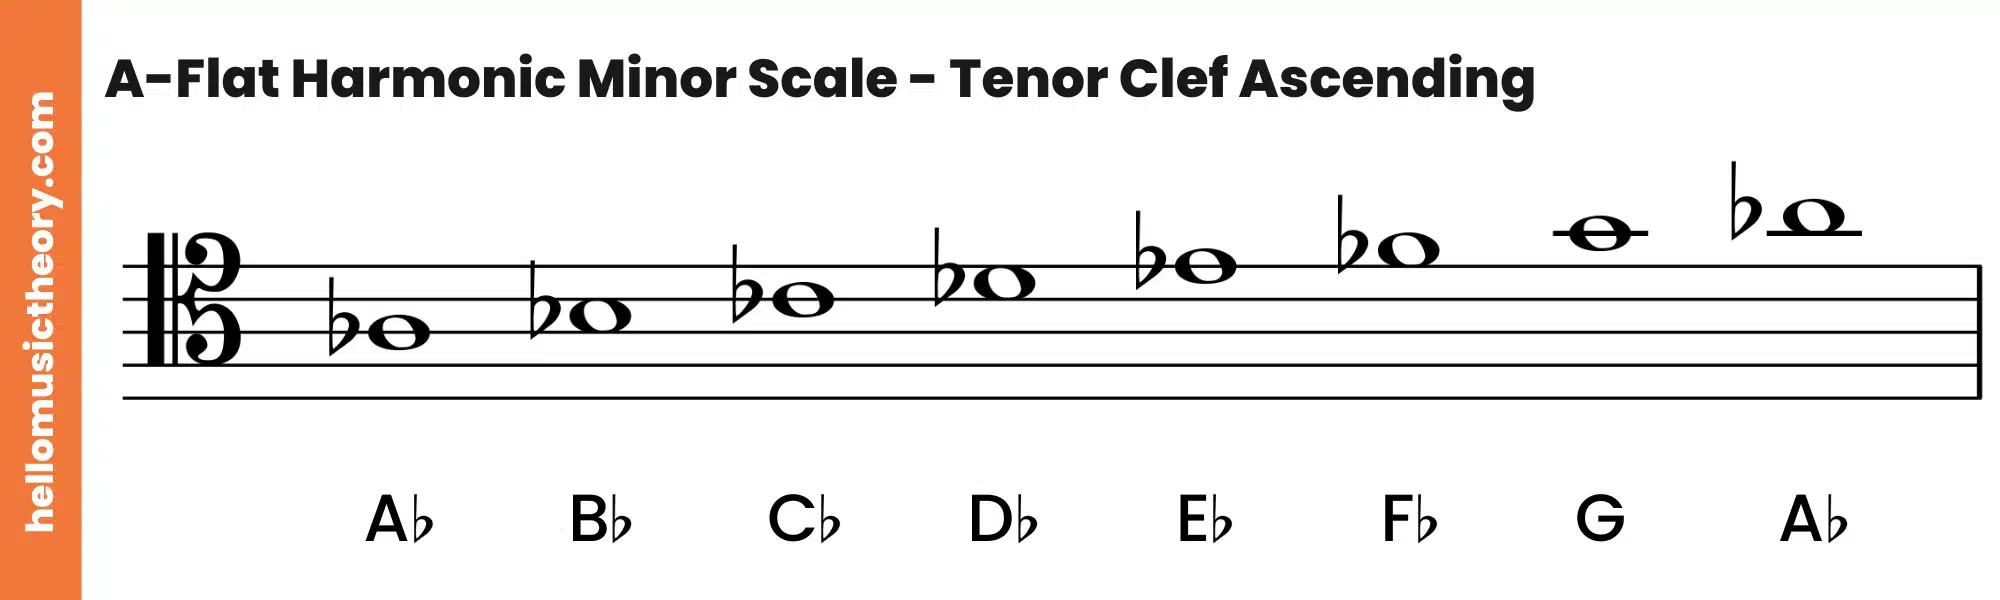 A-Flat Harmonic Minor Scale Tenor Clef Ascending